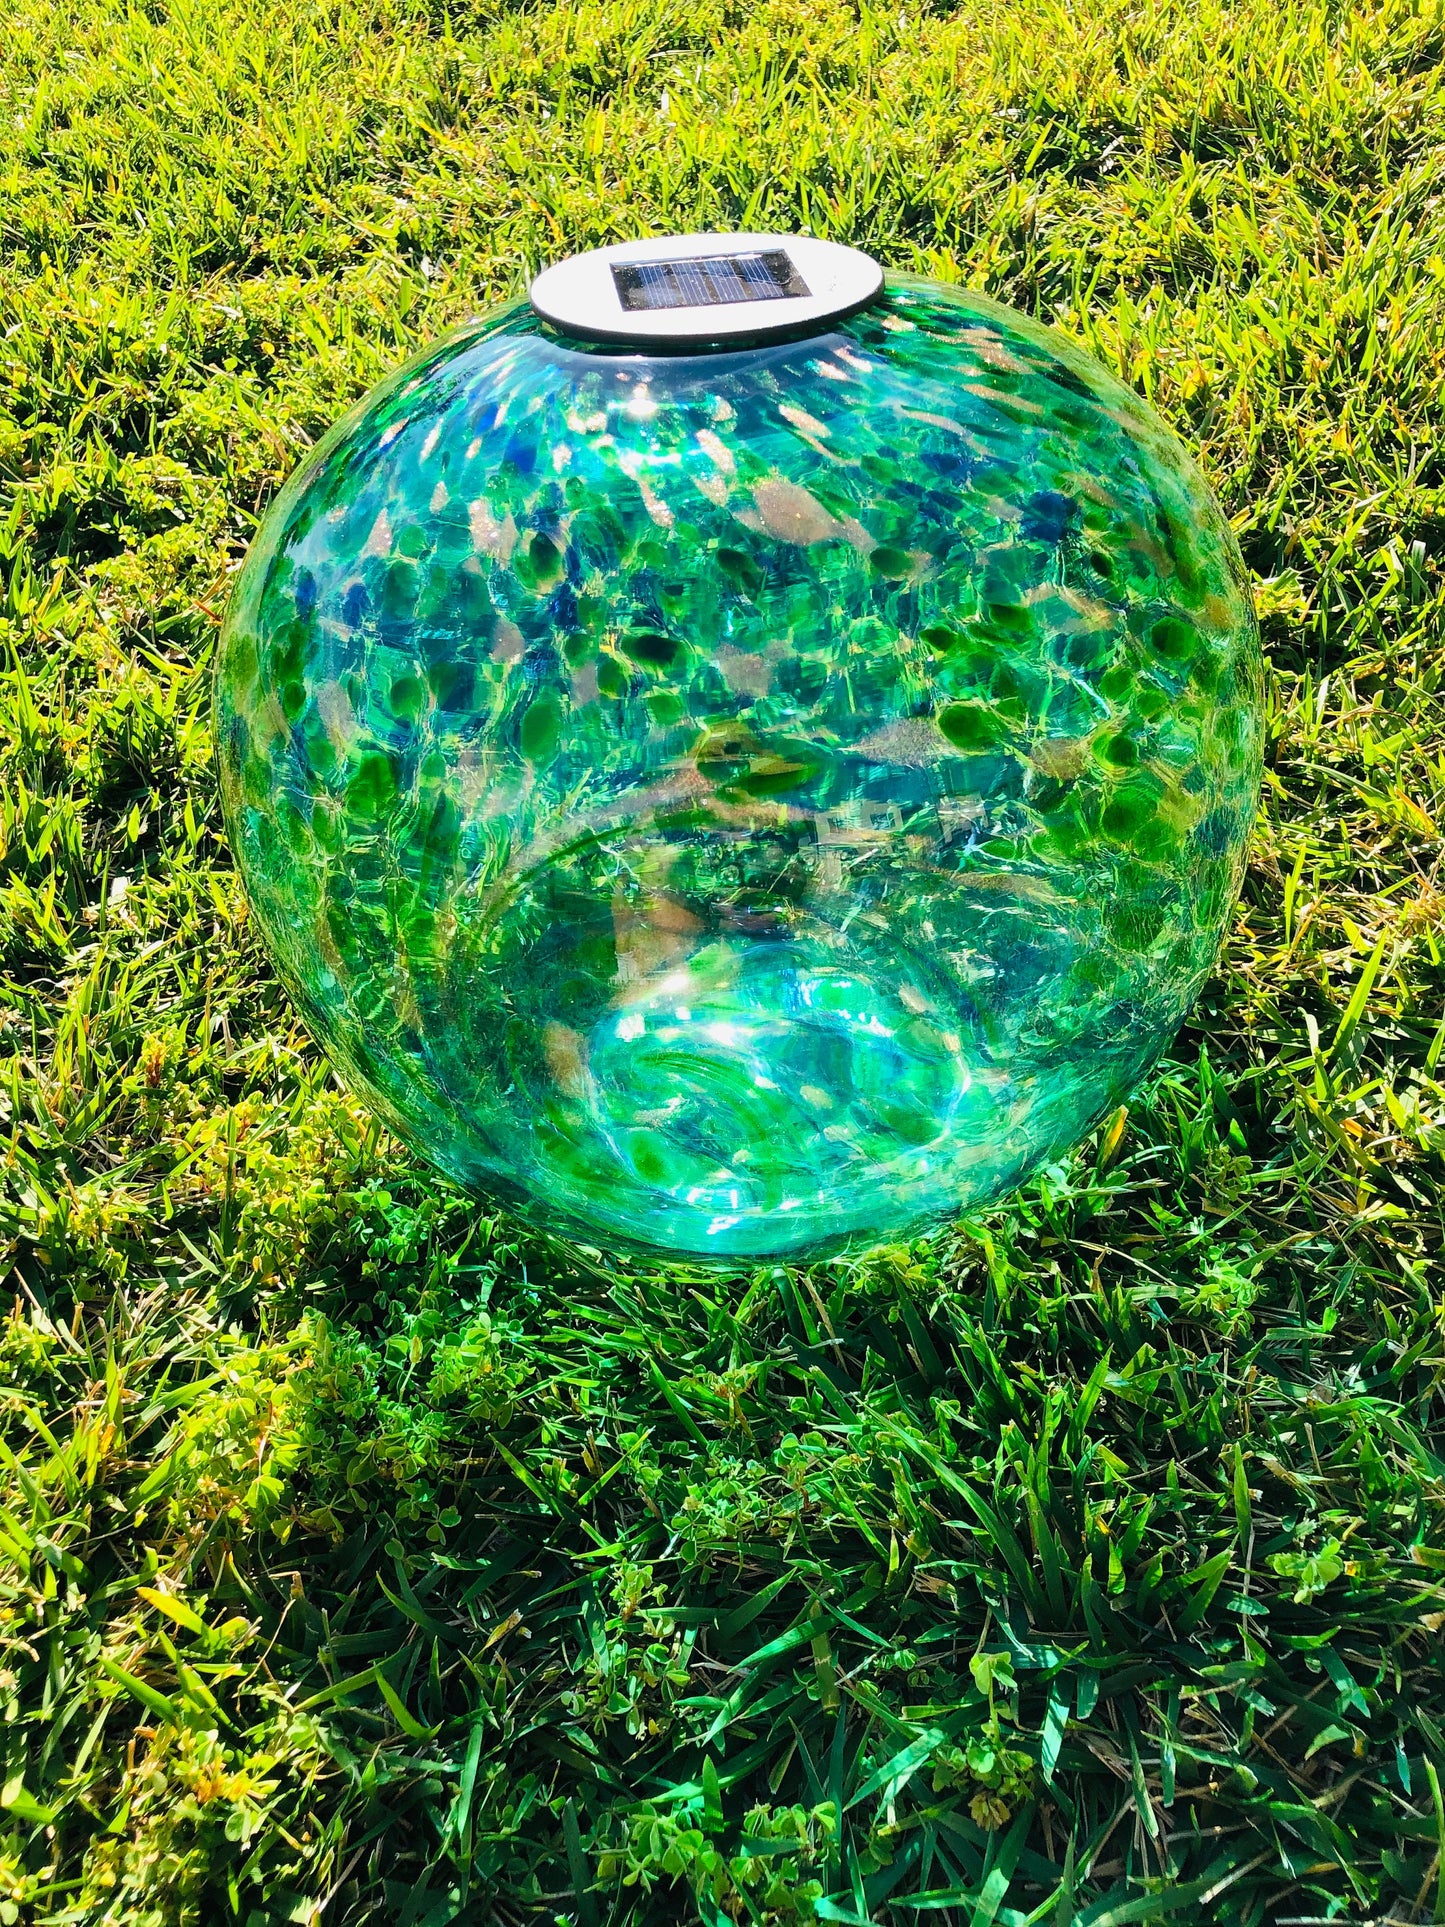 12" XLarge LED Solar Orb Gaze Ball/Garden/Pathway Light/Patio Table Light/Sun Cather/Art Glass Green